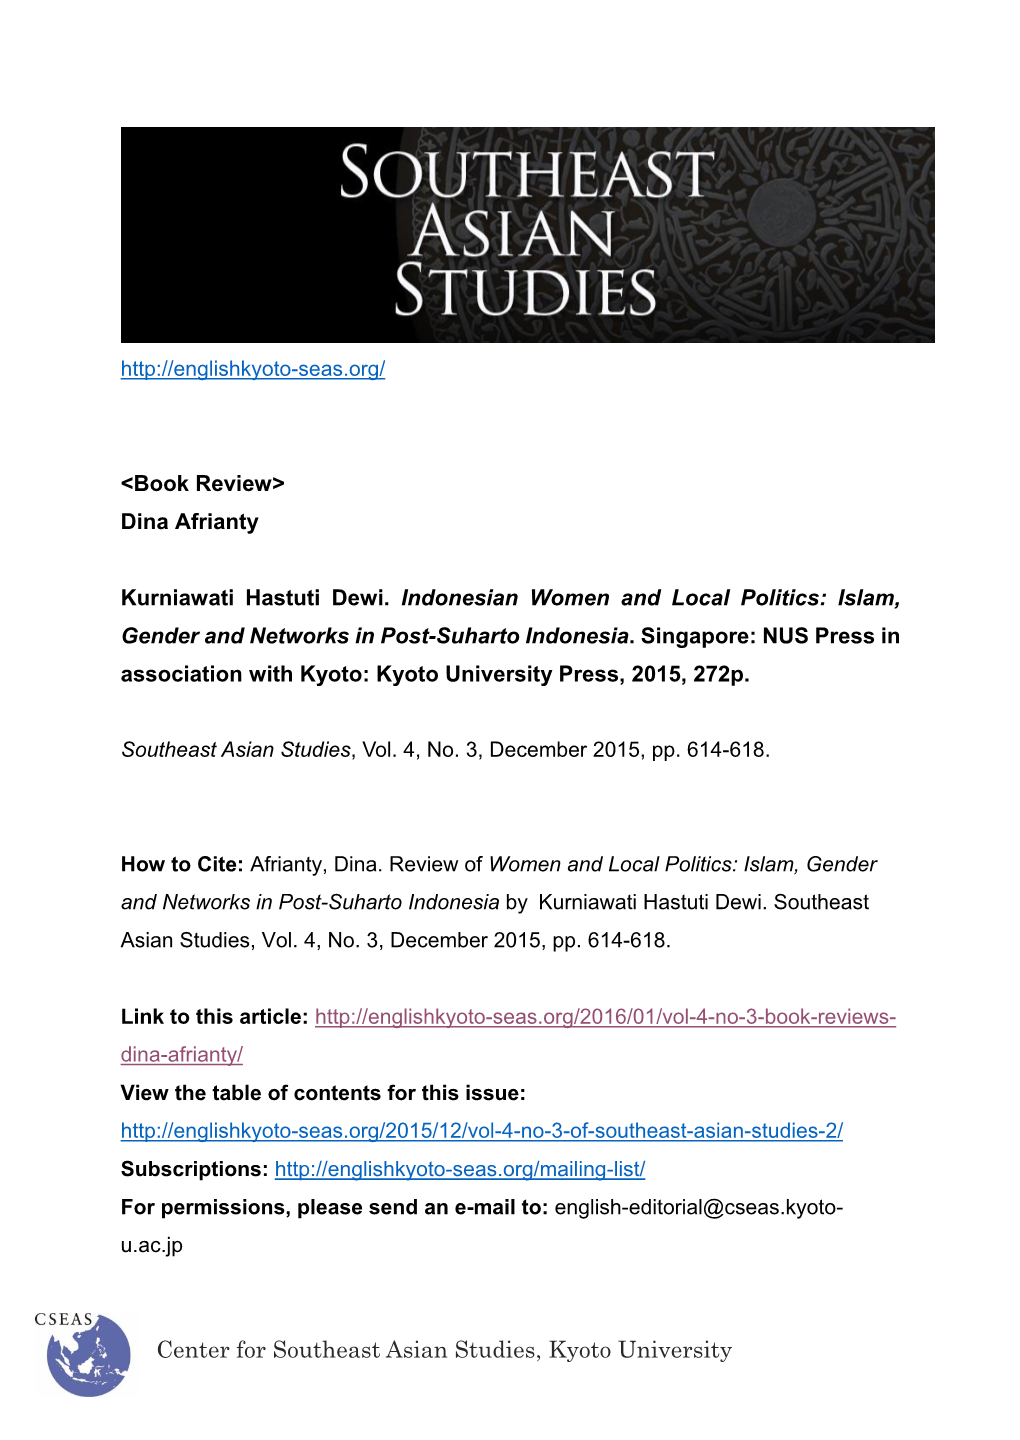 Center for Southeast Asian Studies, Kyoto University 614 Book Reviews